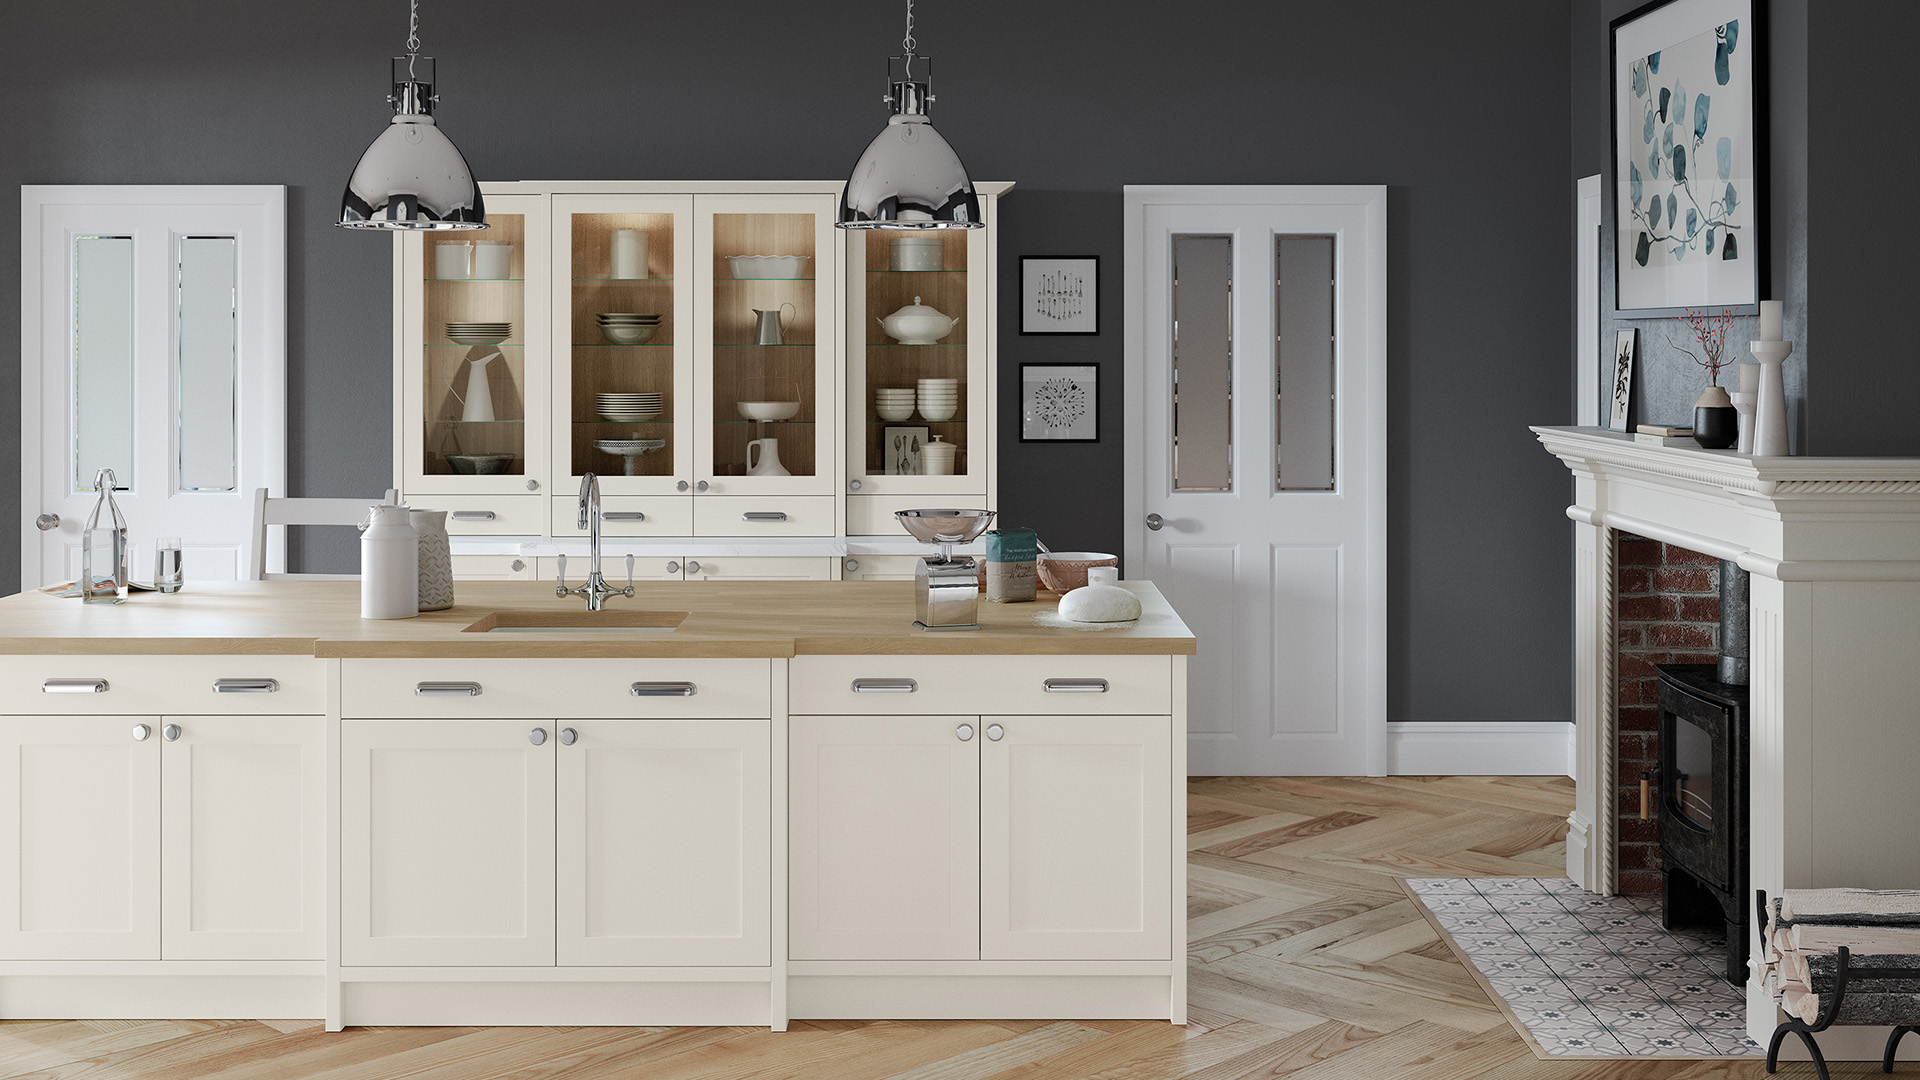 Aldana solid wood porcelain kitchens showcasing durable craftsmanship with a chic porcelain touch